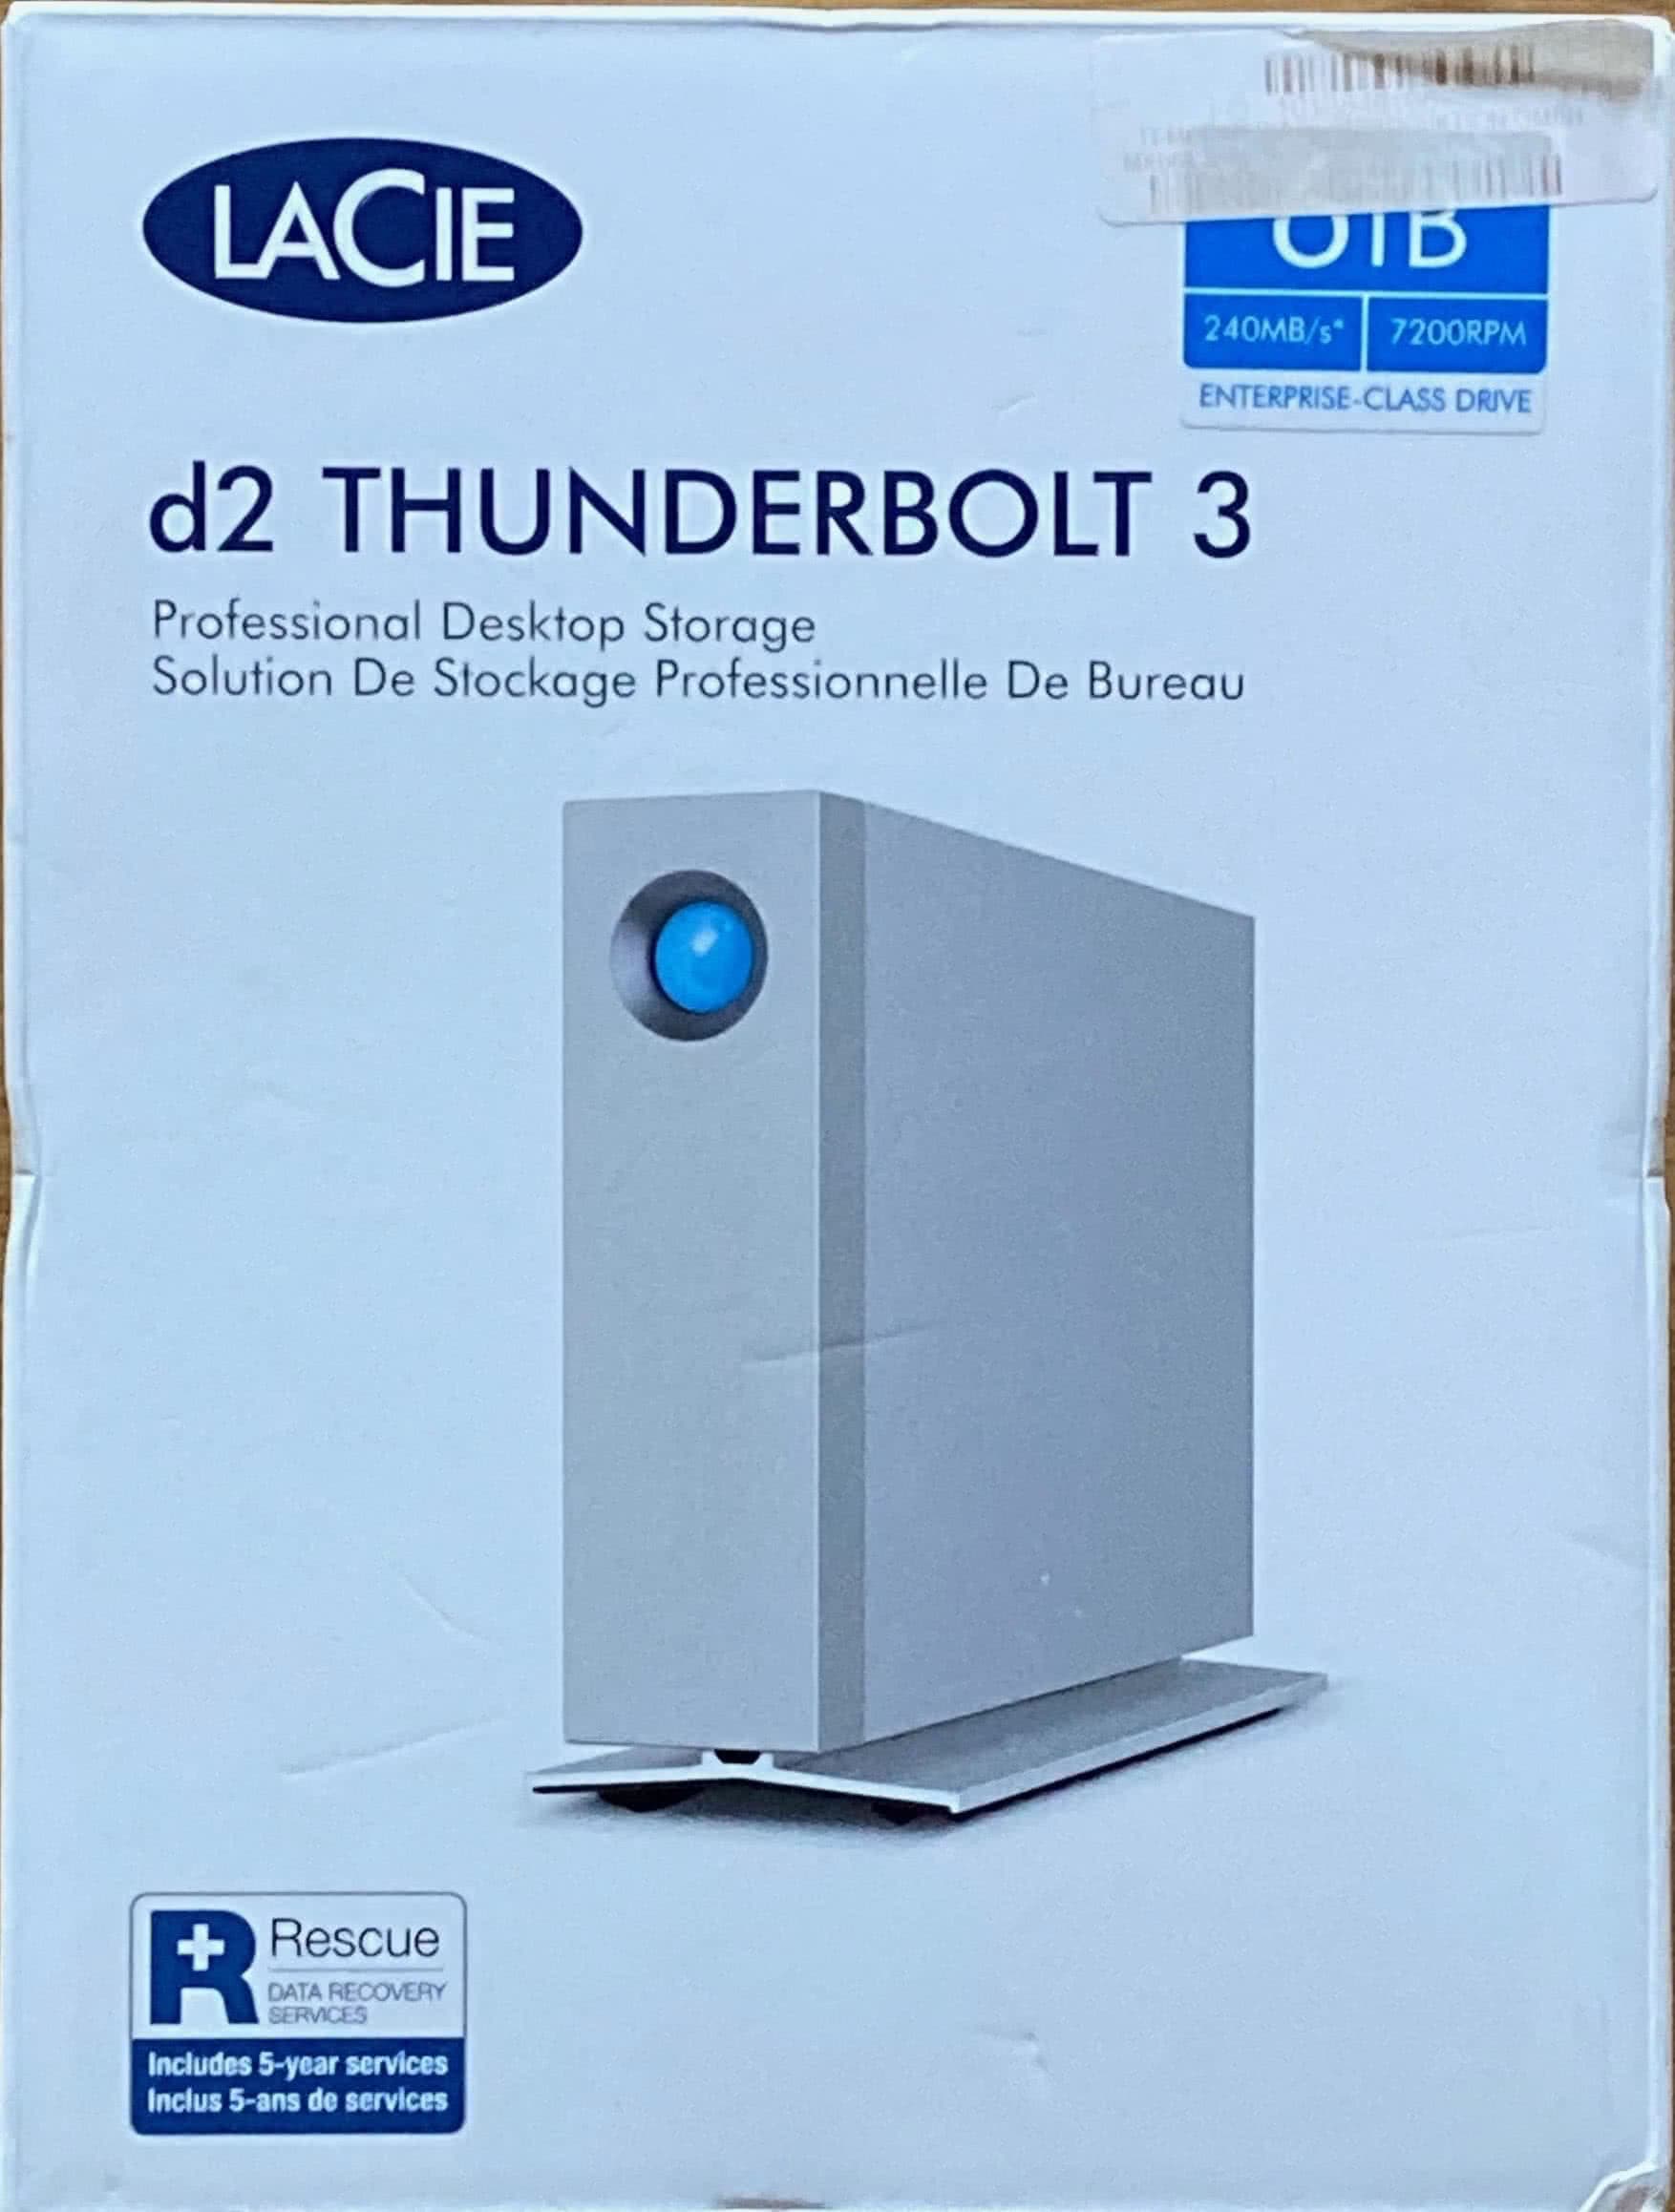 Foto: Originalkarton der externen Festplatte LaCie d2 Thunderbolt 3, Kartonvorderseite